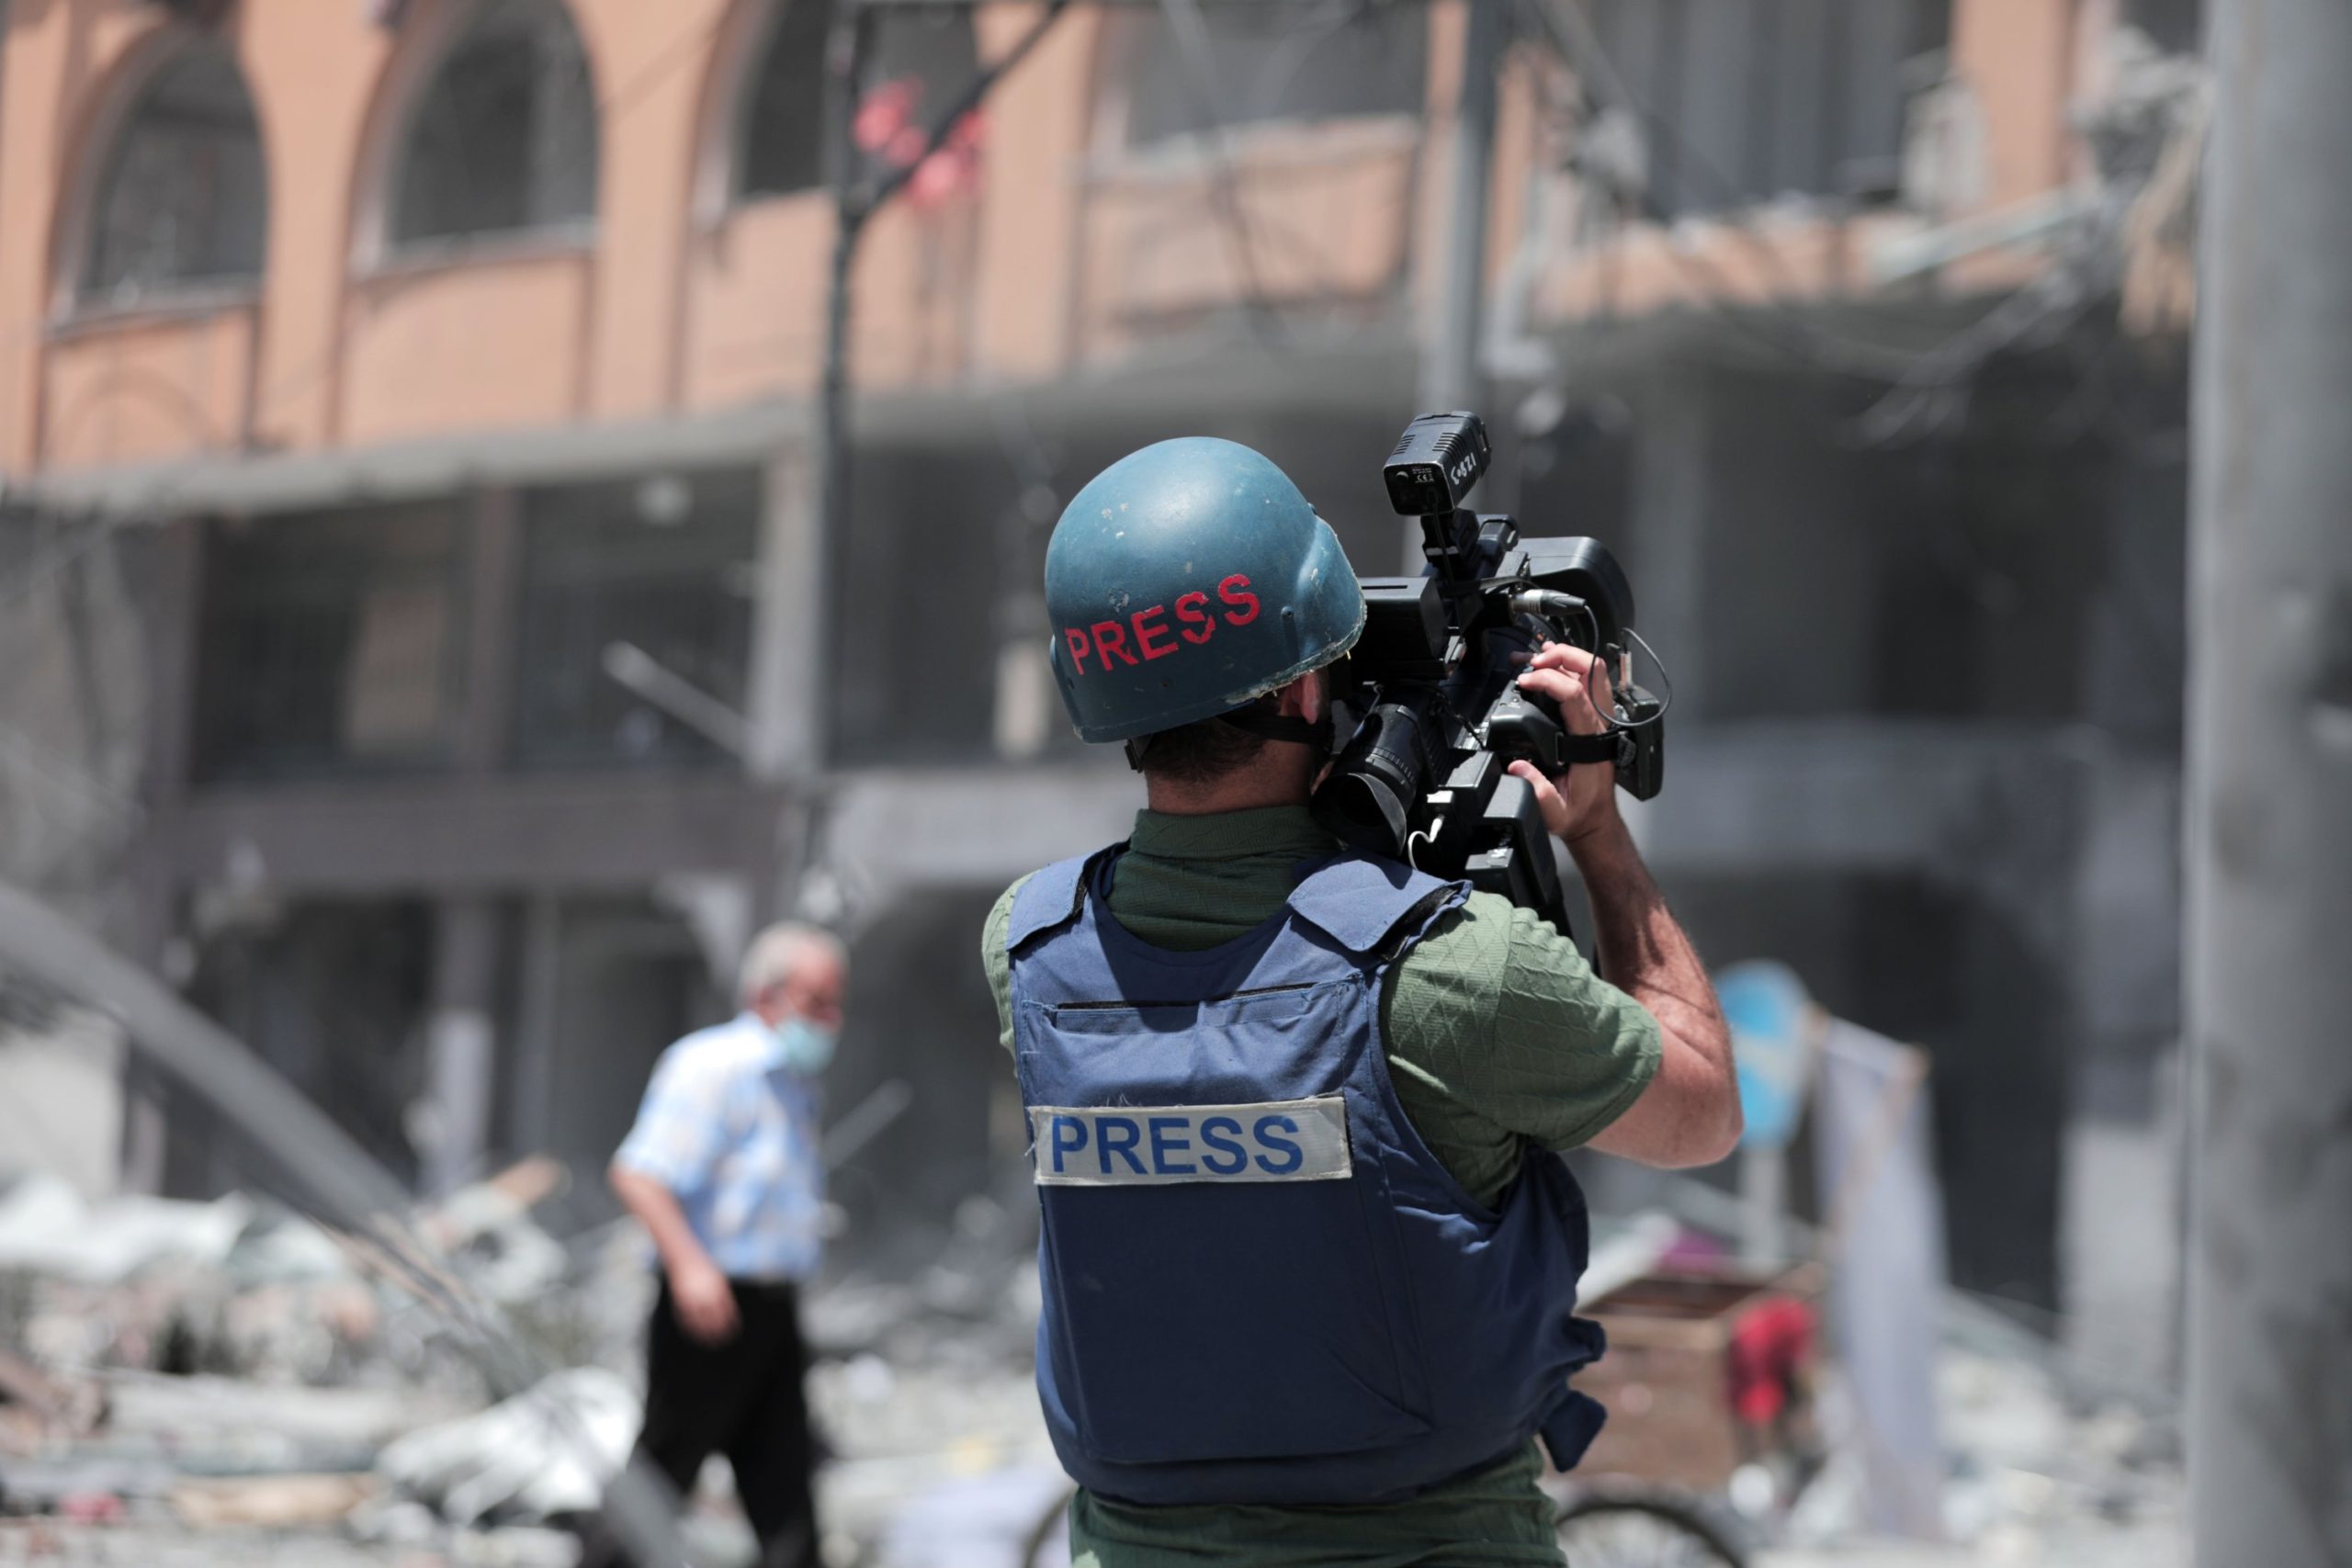 Palestine : Cinq journalistes tués à Gaza selon la FIJ